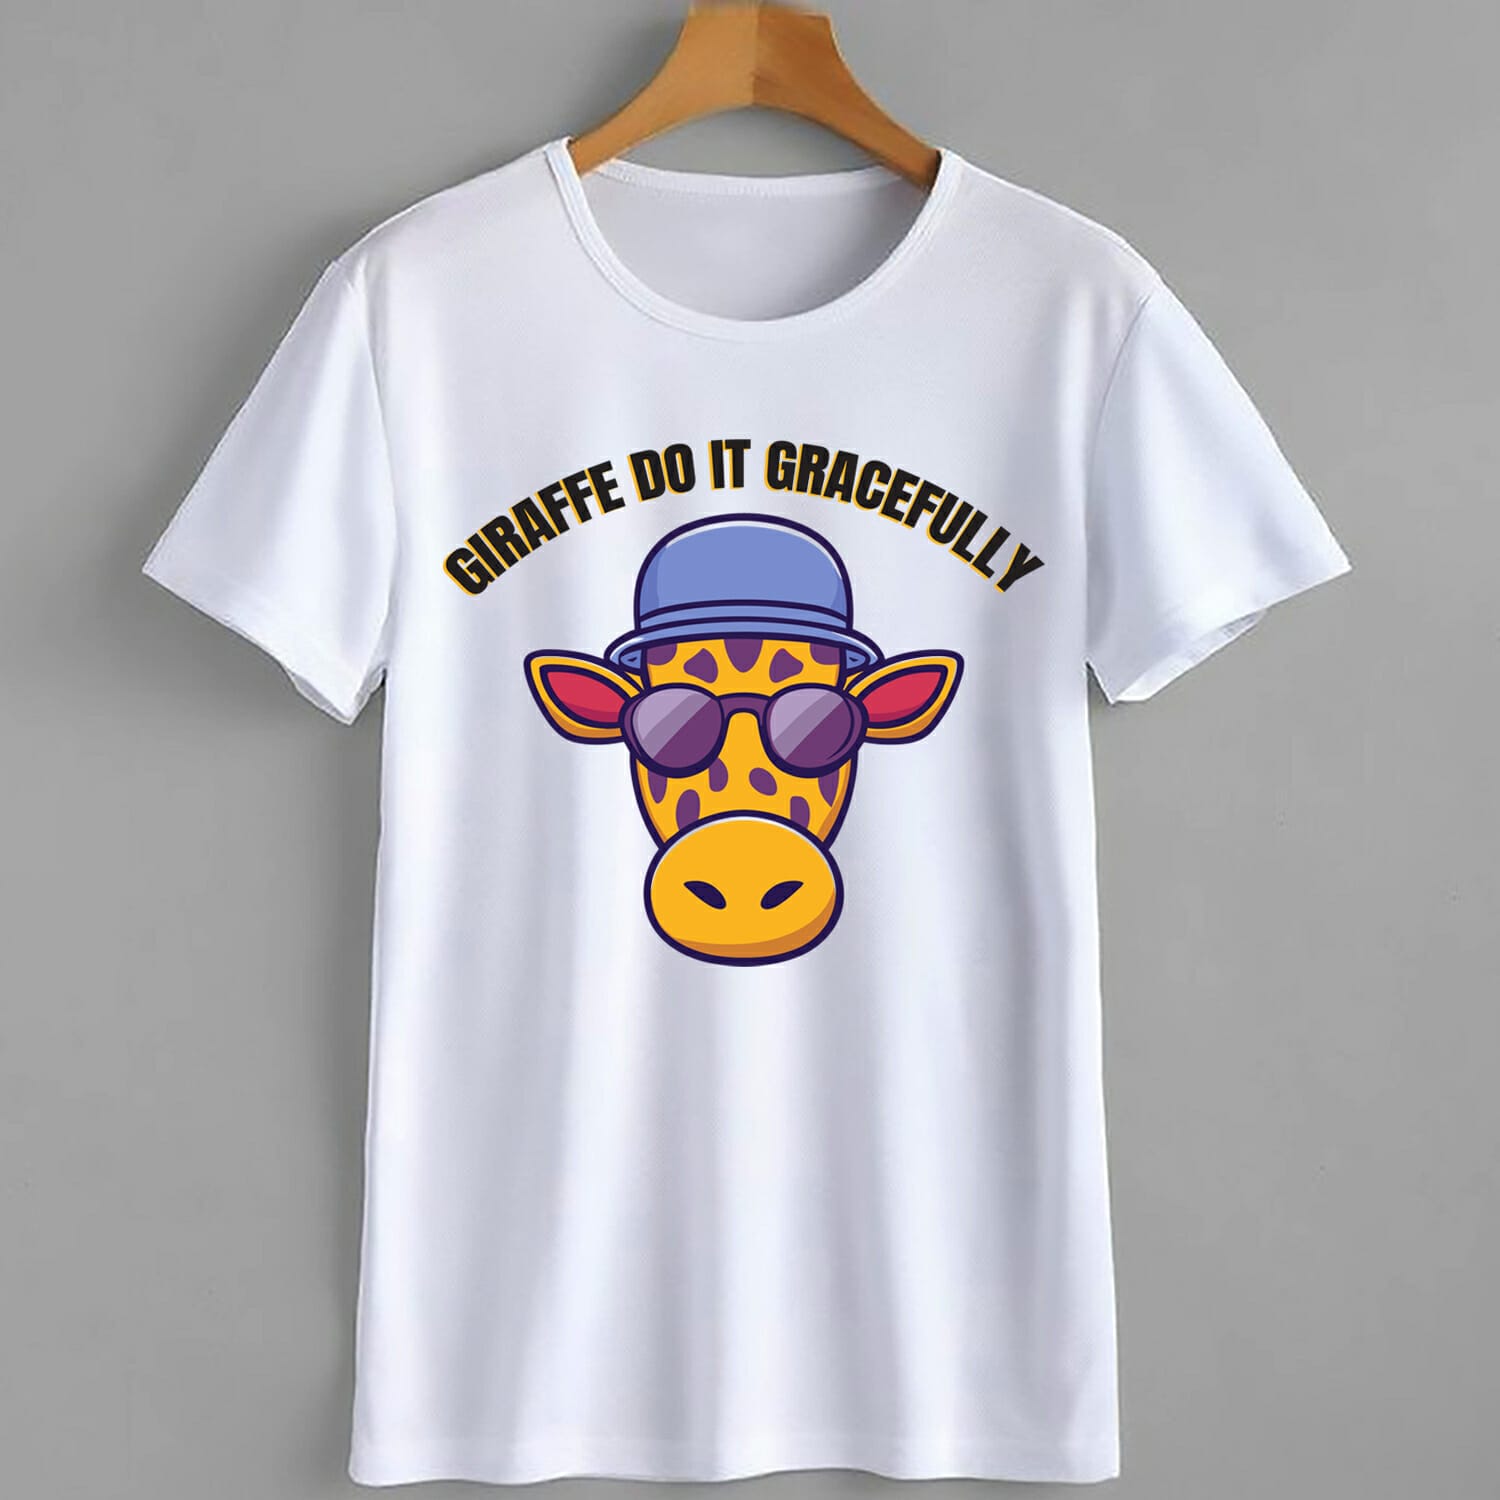 Giraffe Do It Gracefully - Funny T-Shirt Design